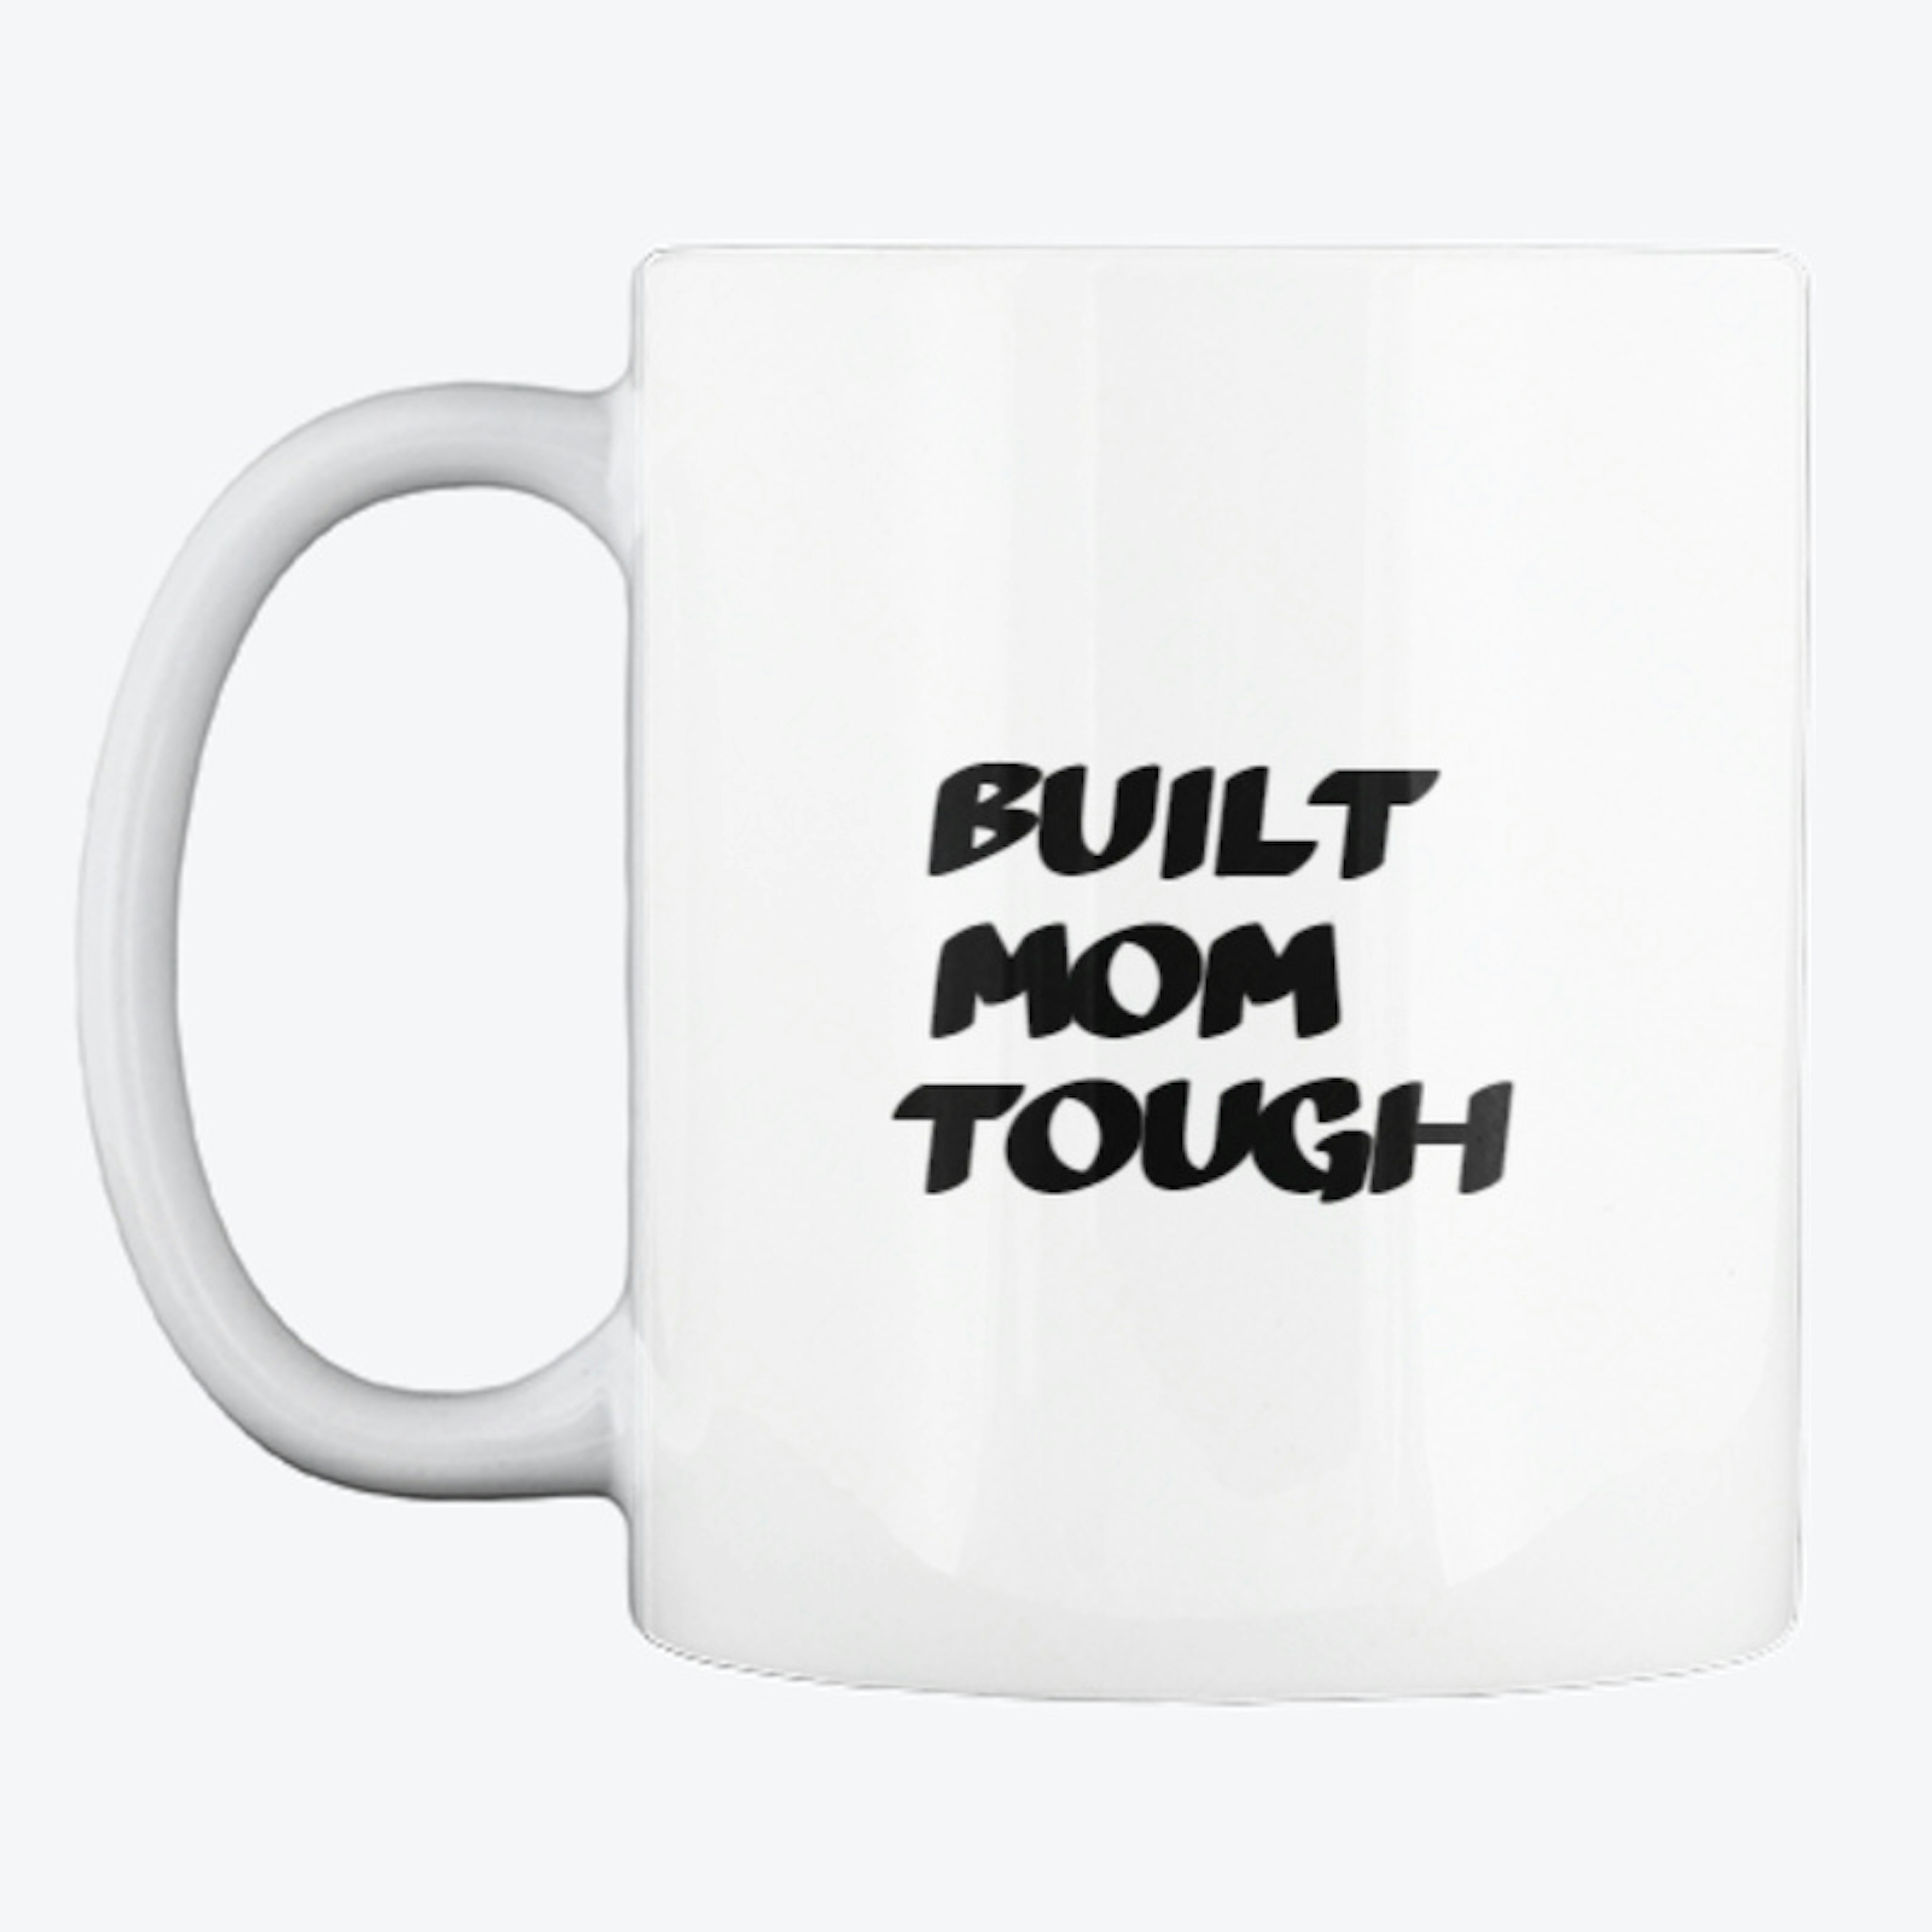 All Women are Built Mom Tough